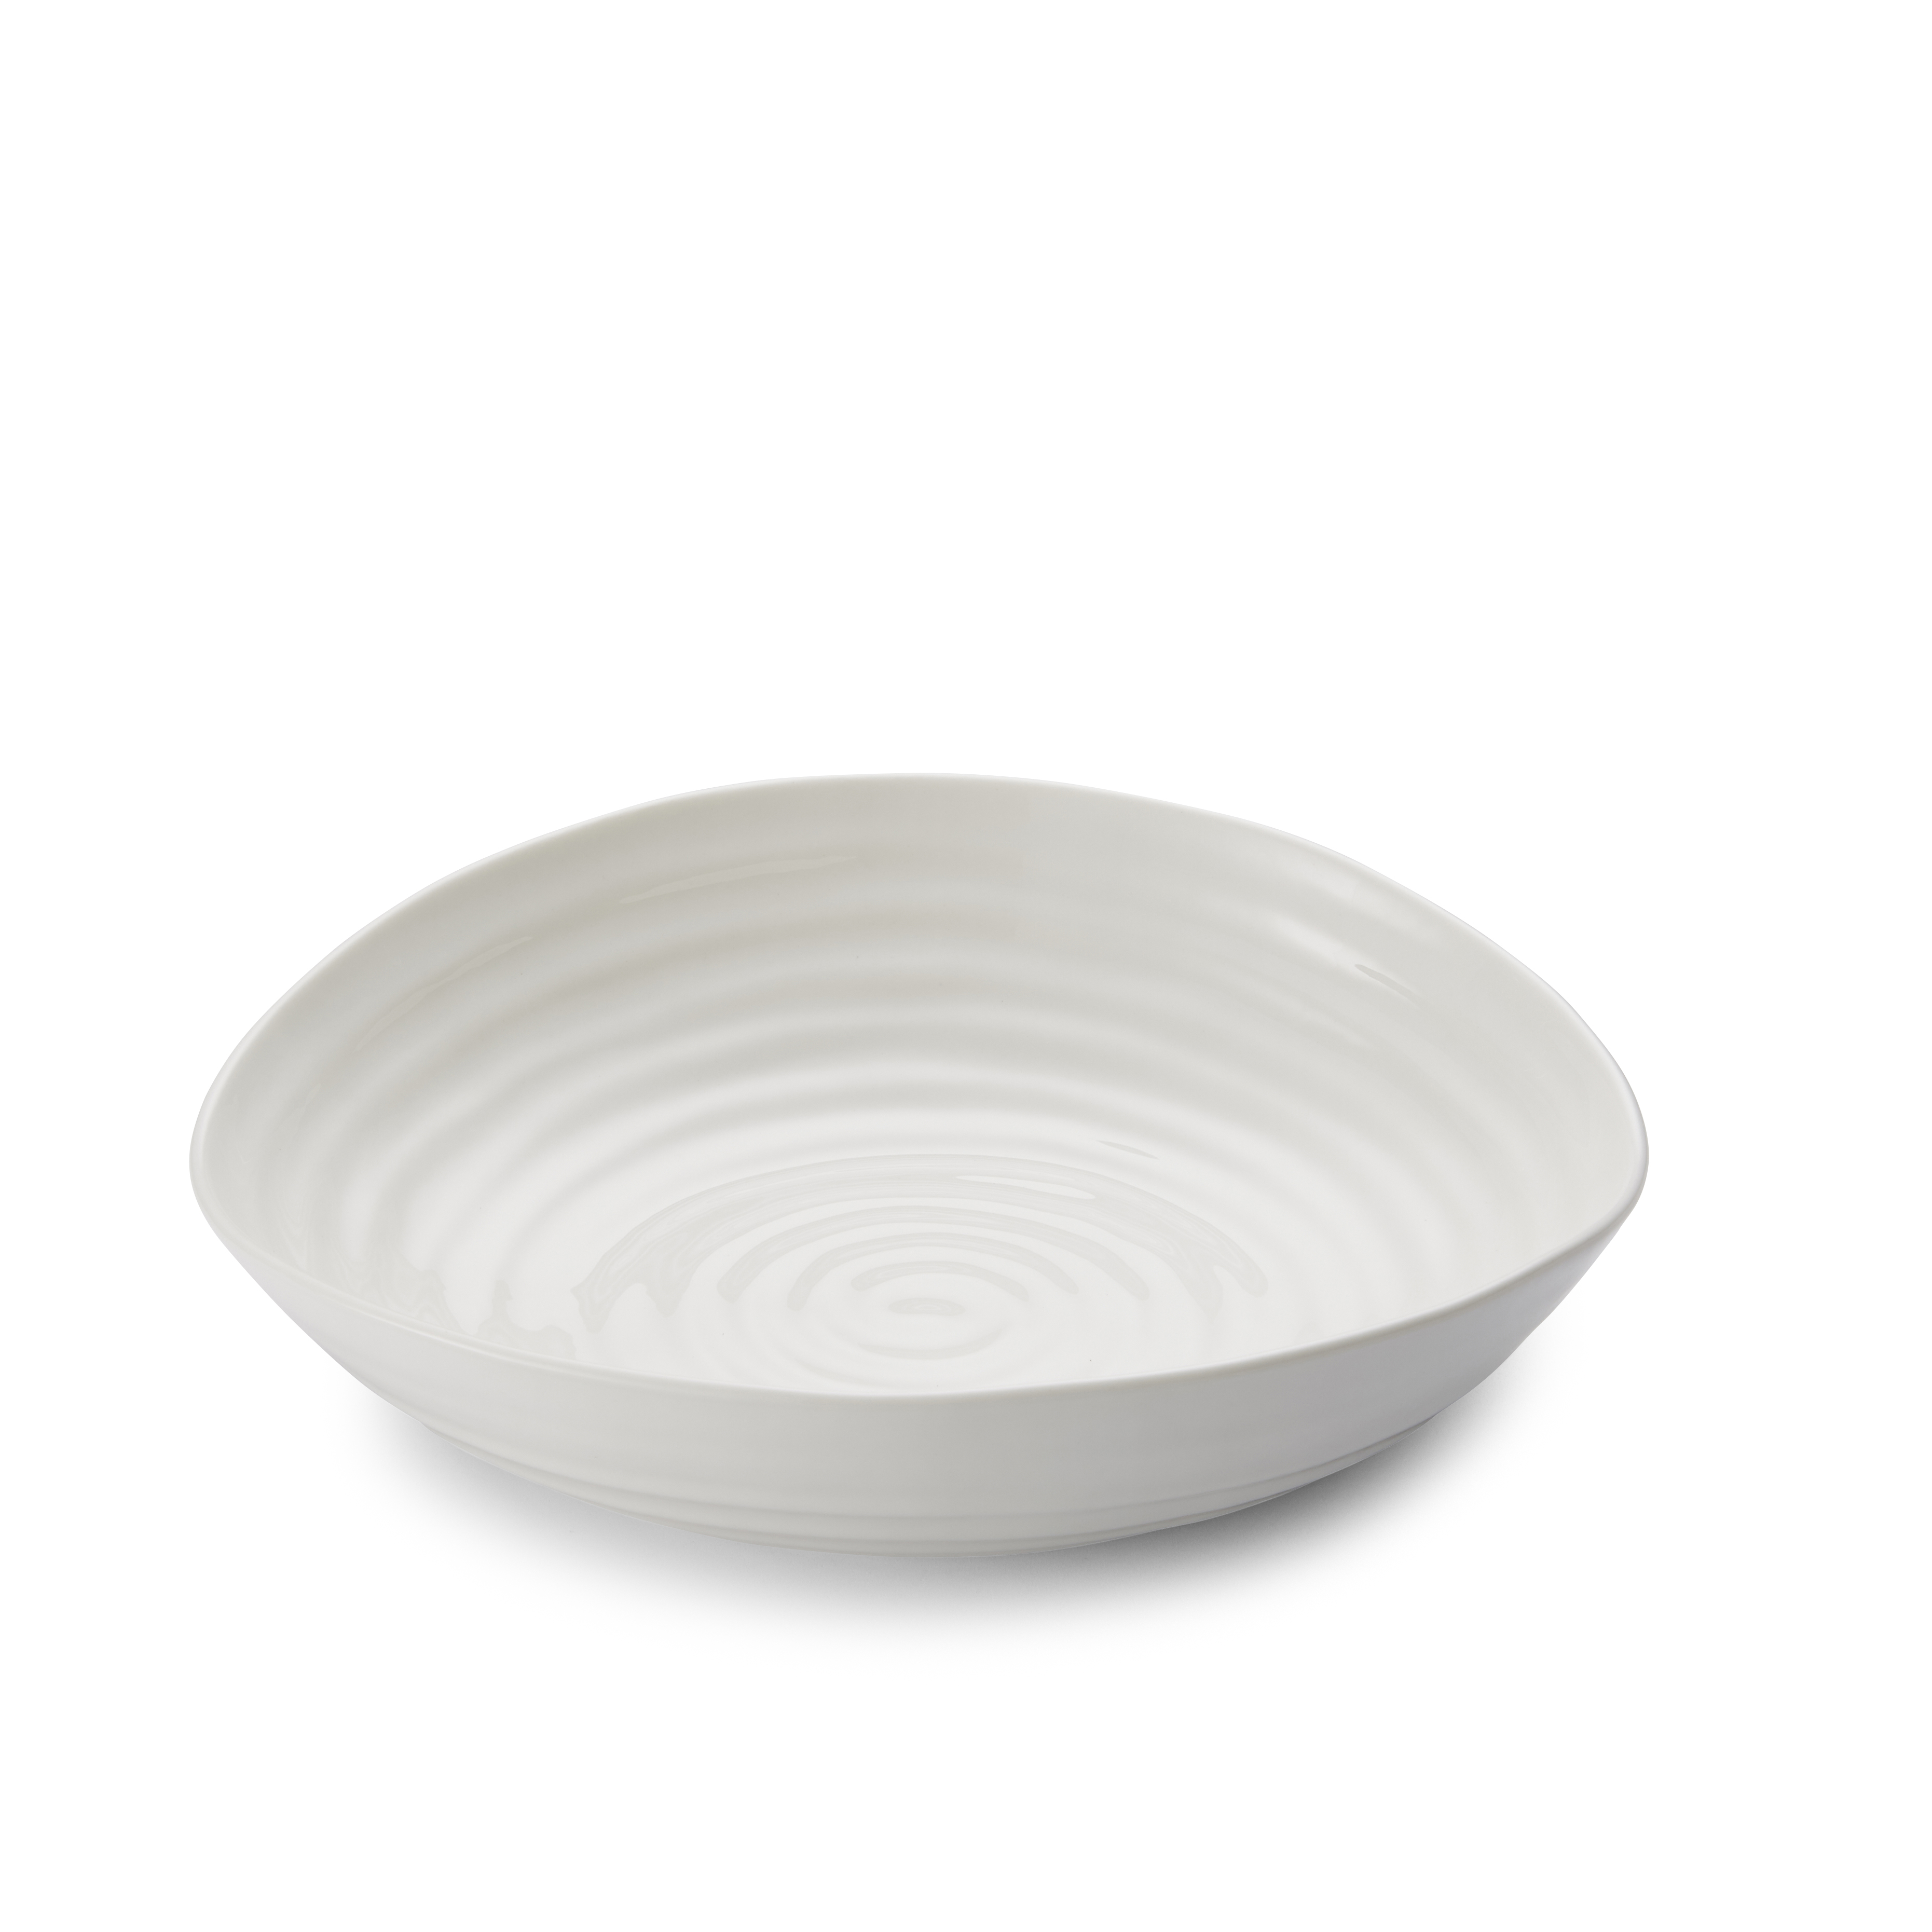 Sophie Conran White Pasta Bowls Set of 4 image number null